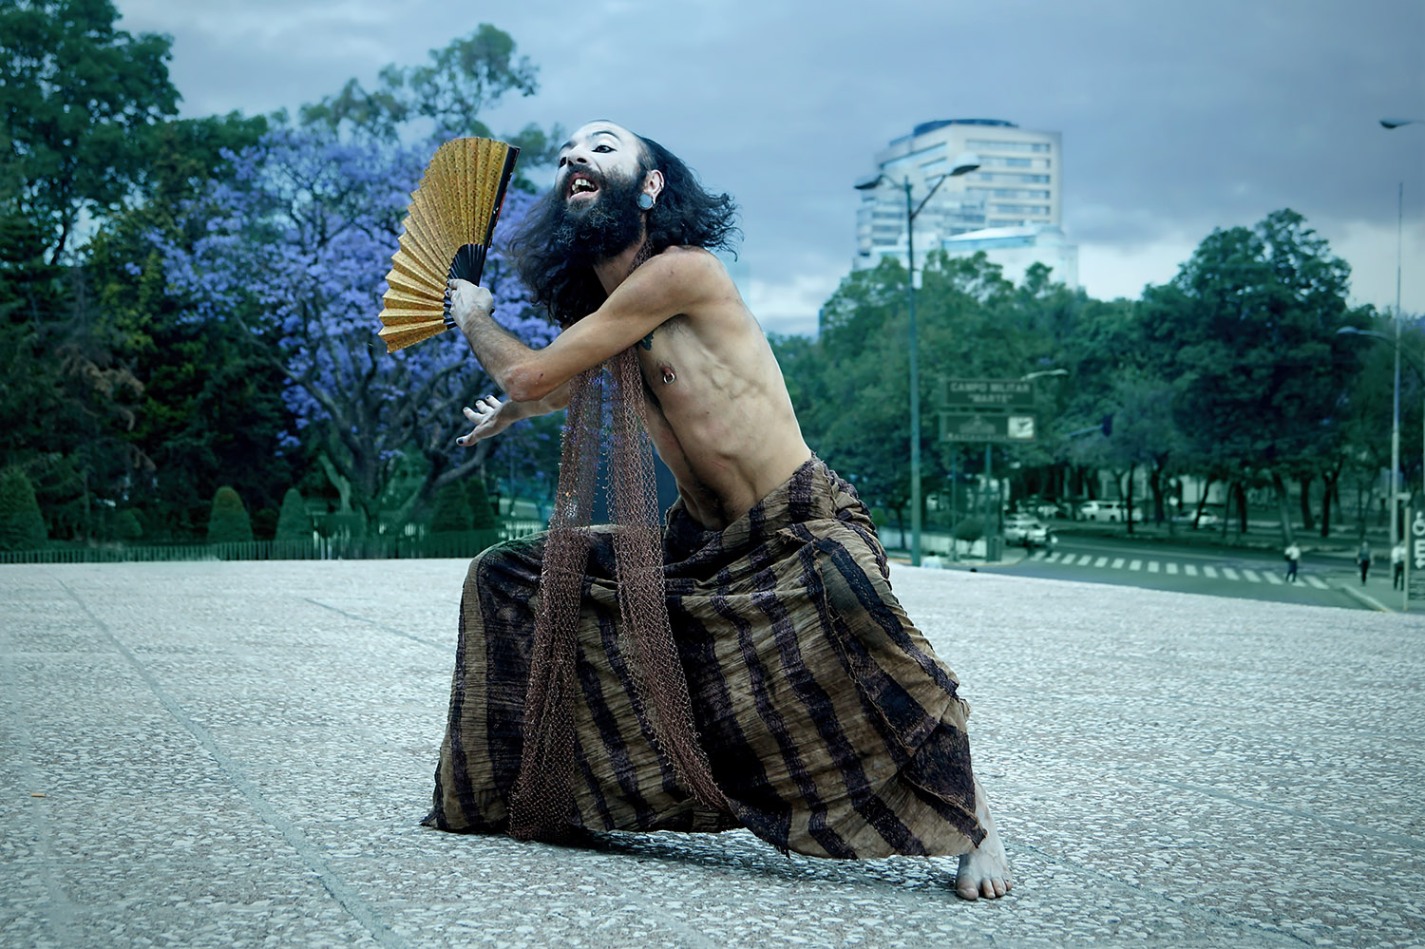 Migui Mandalasol-Butoh Performance Art-Mario Patino-Queer Photography-Arte de Accion-Mexico-12